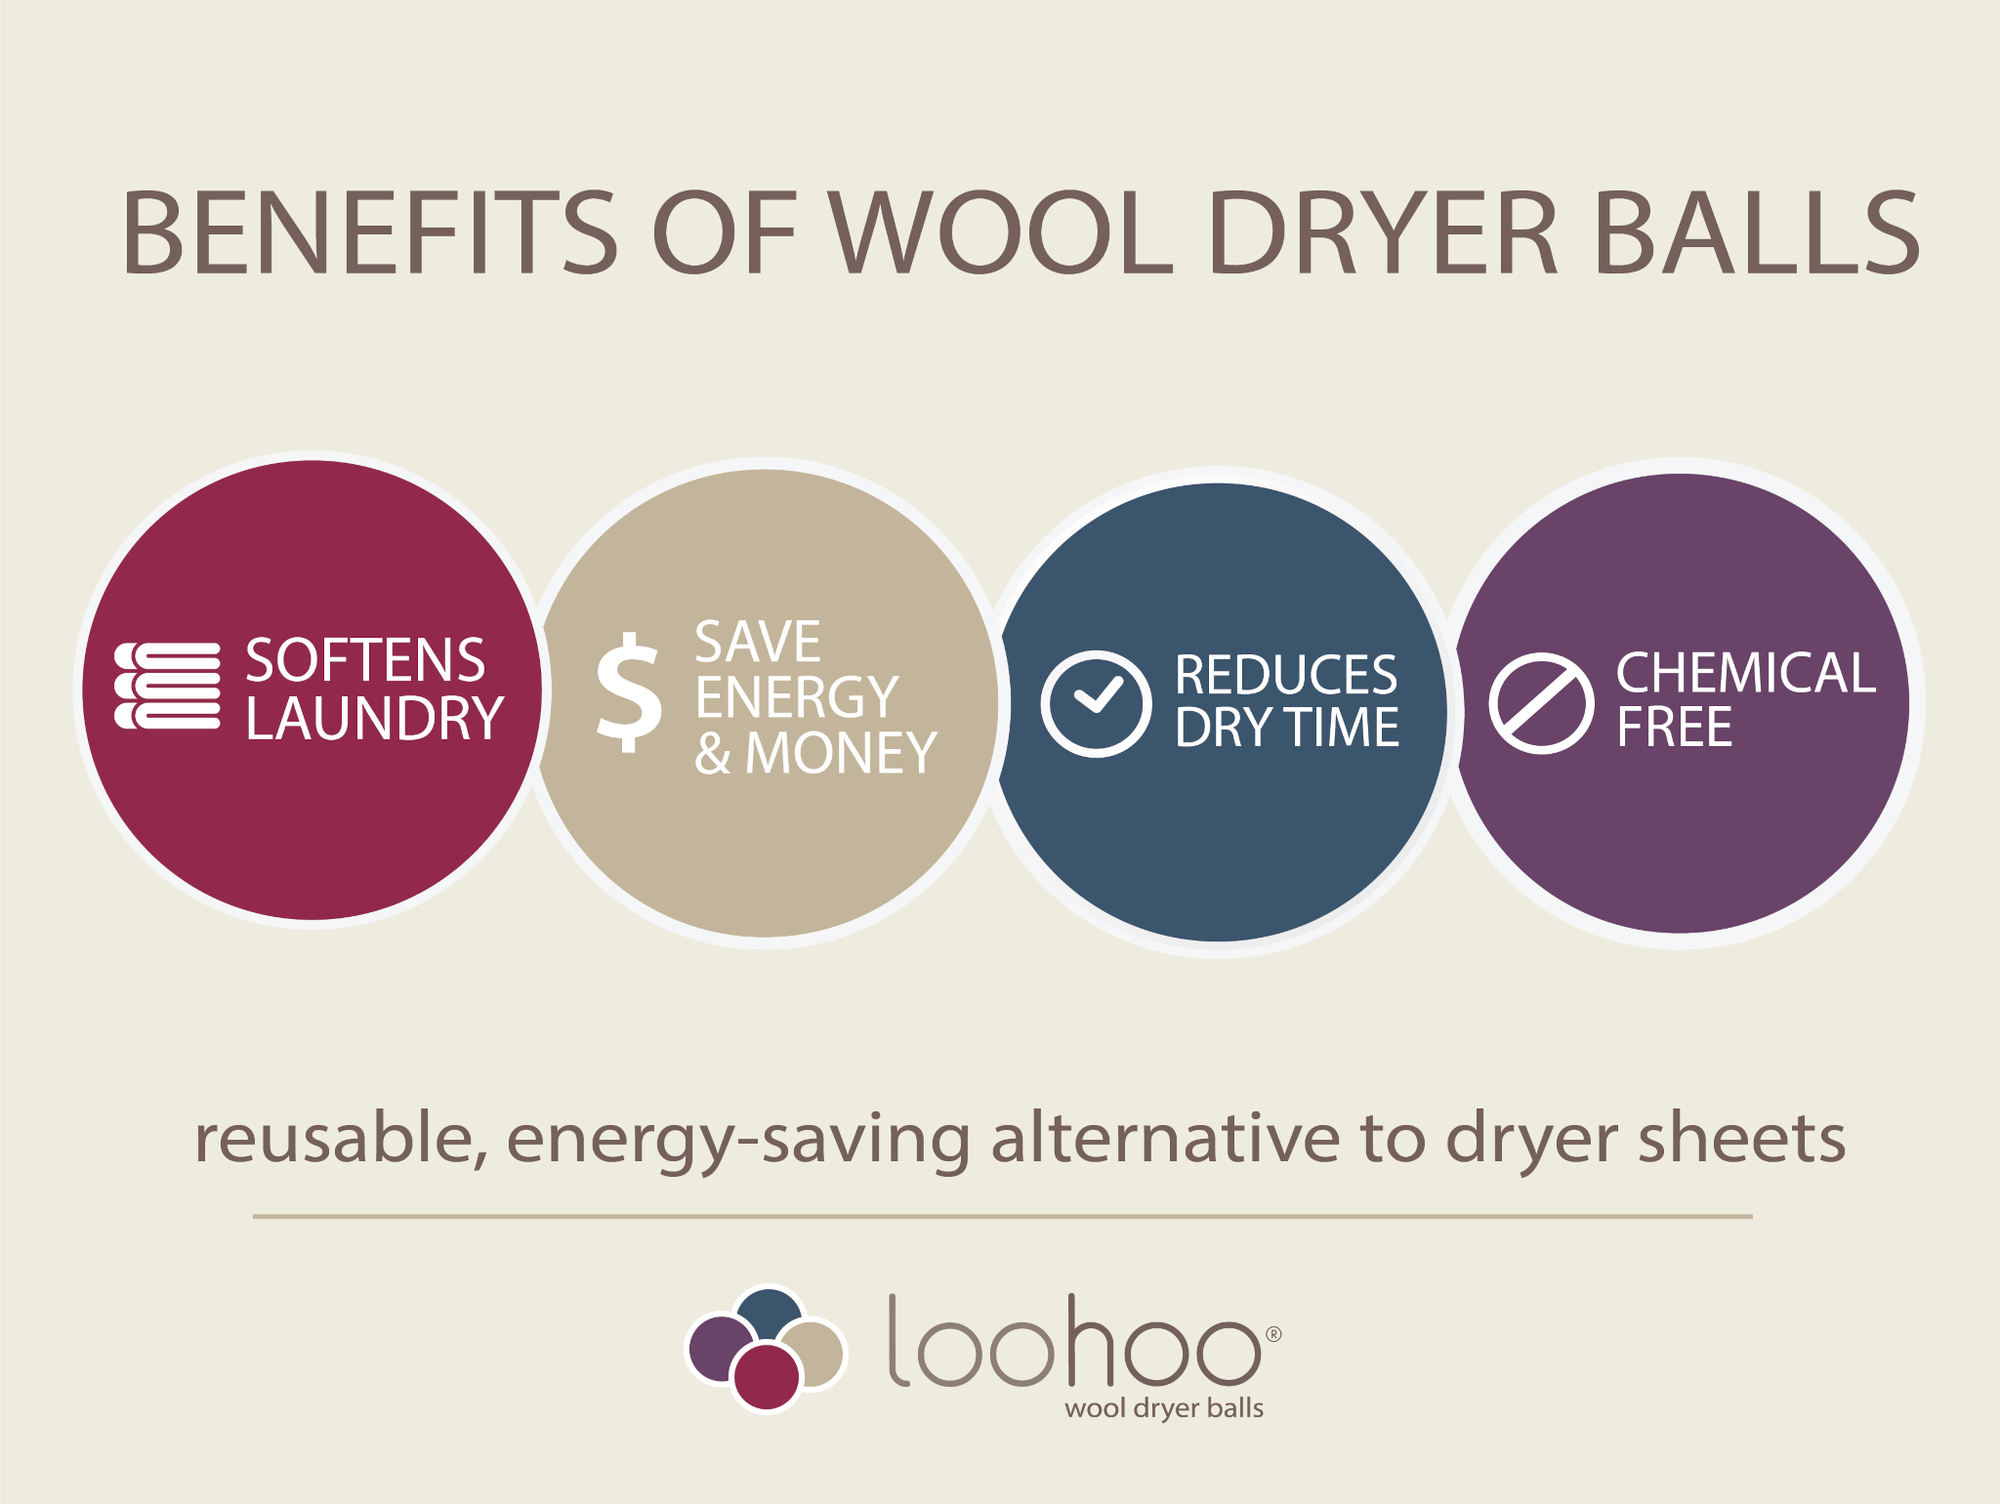 Money-saving tip: Reuse dryer sheets 